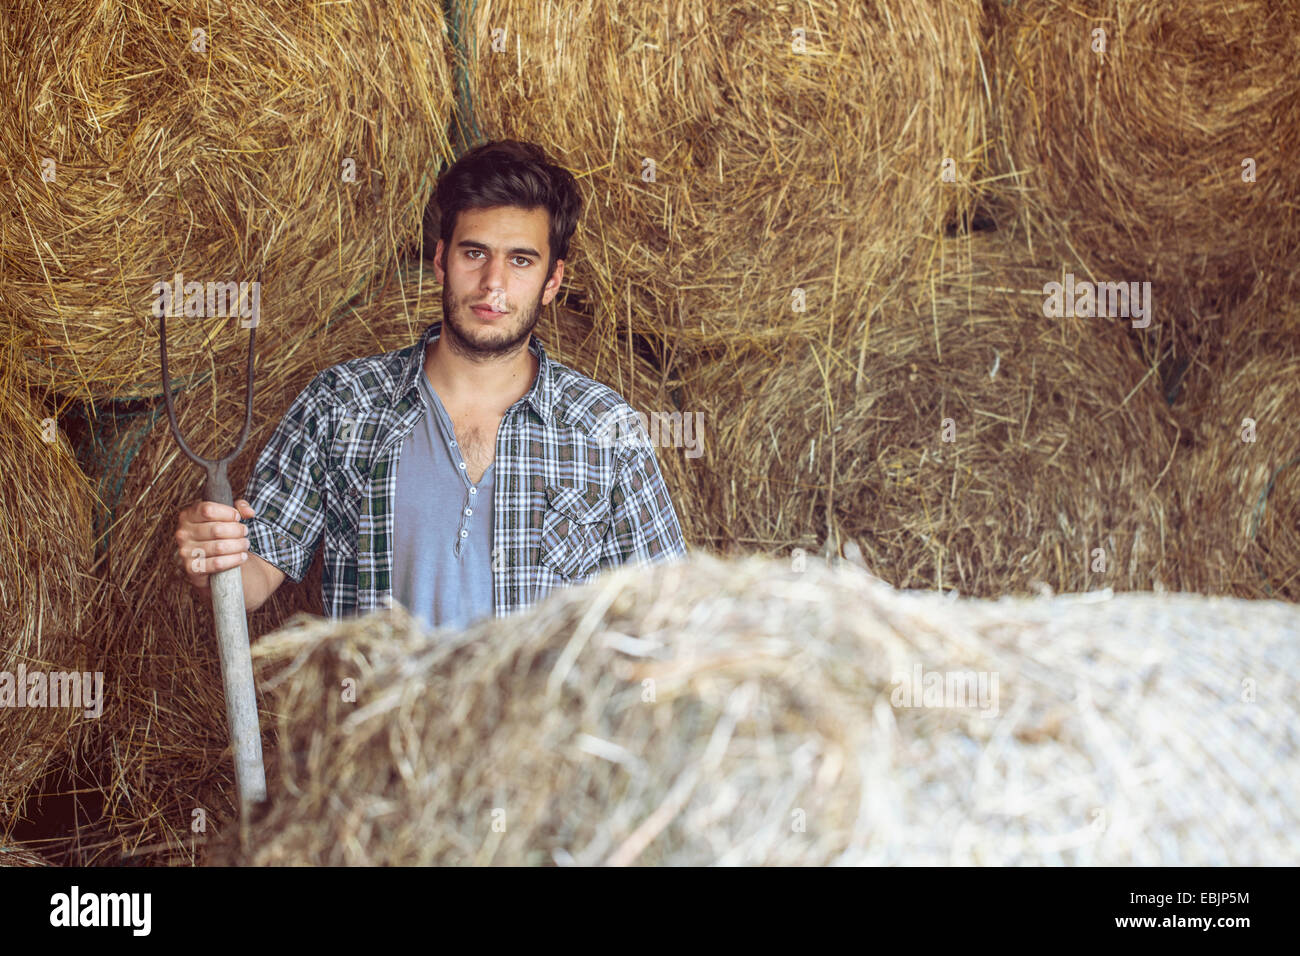 Portrait of young male farmer in straw barn with pitchfork, Premosello, Verbania, Piemonte, Italy Stock Photo